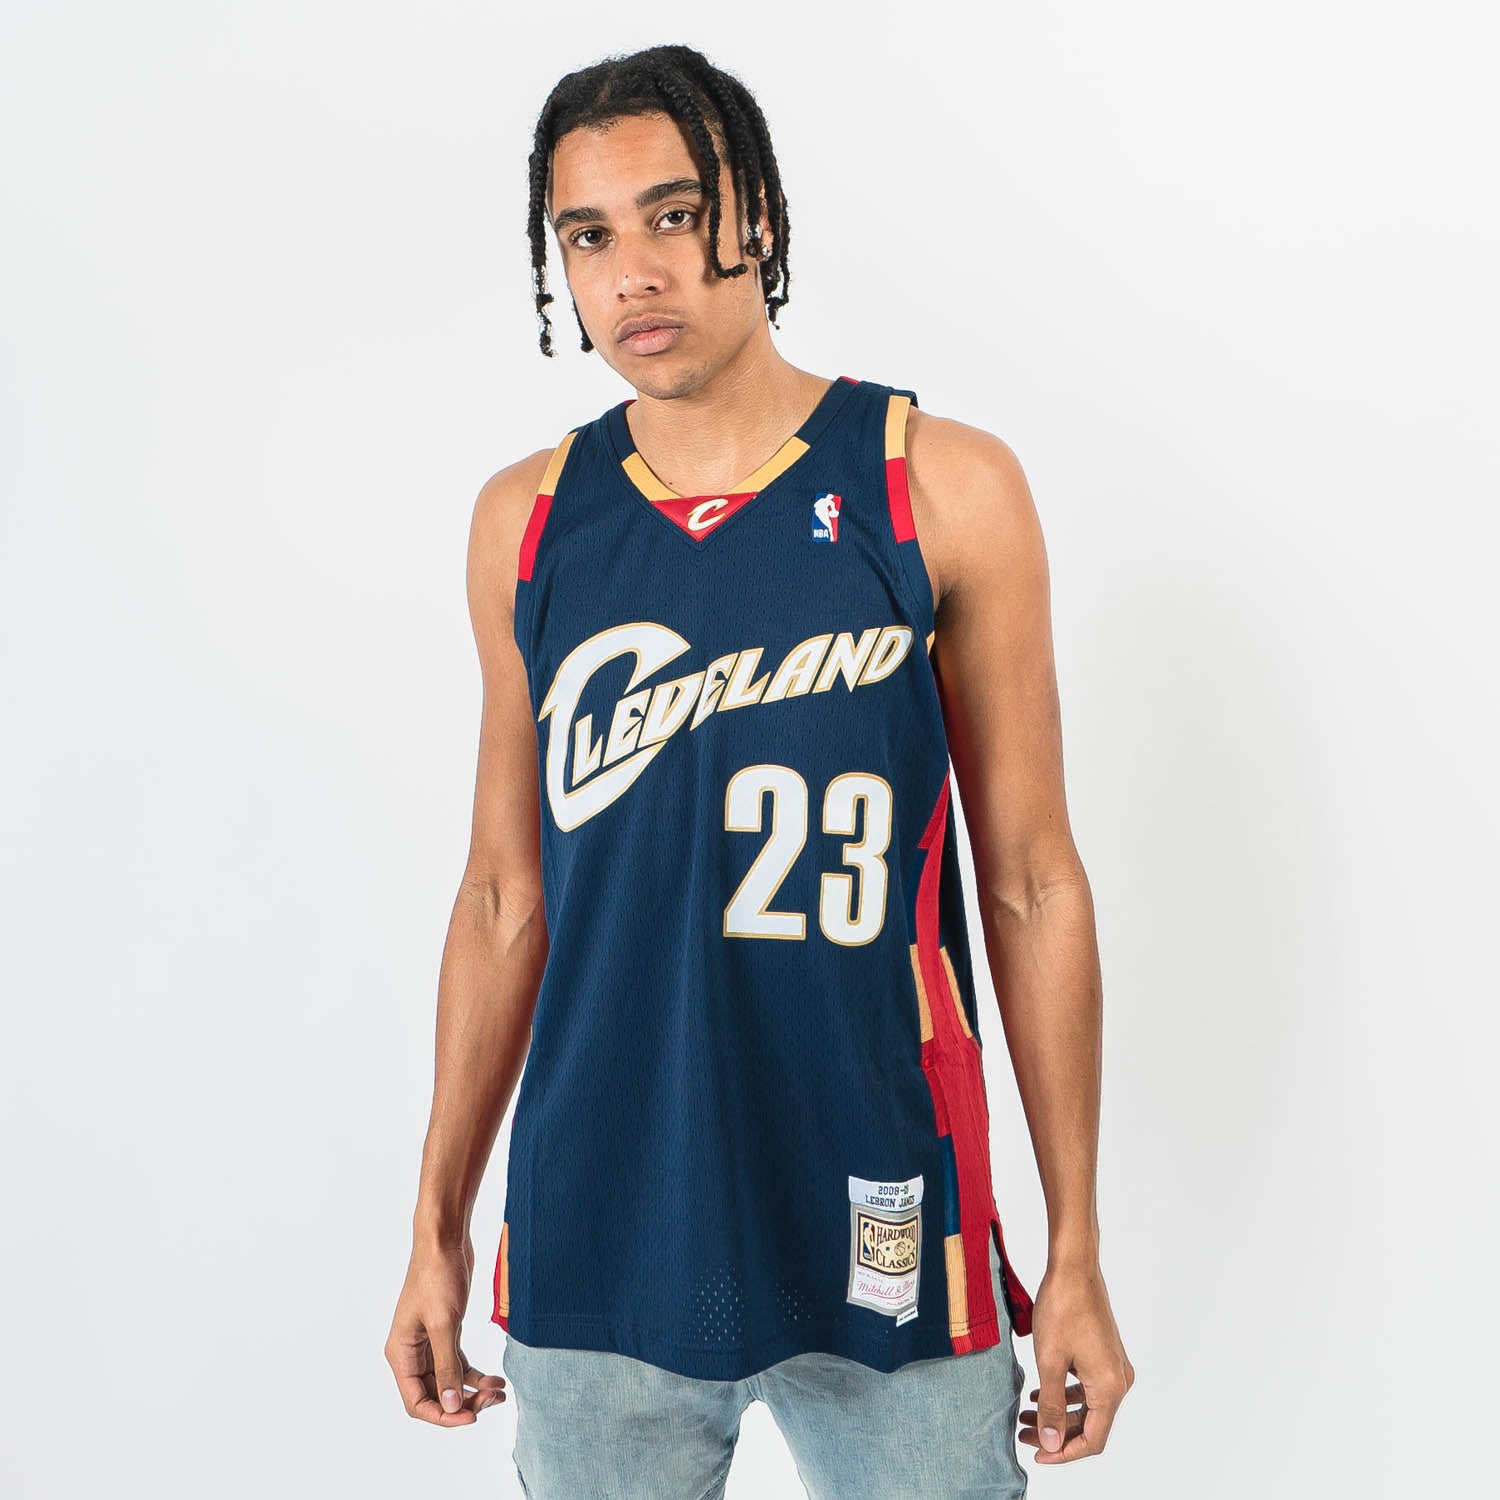 Cleveland Cavaliers Alternate Uniform - National Basketball